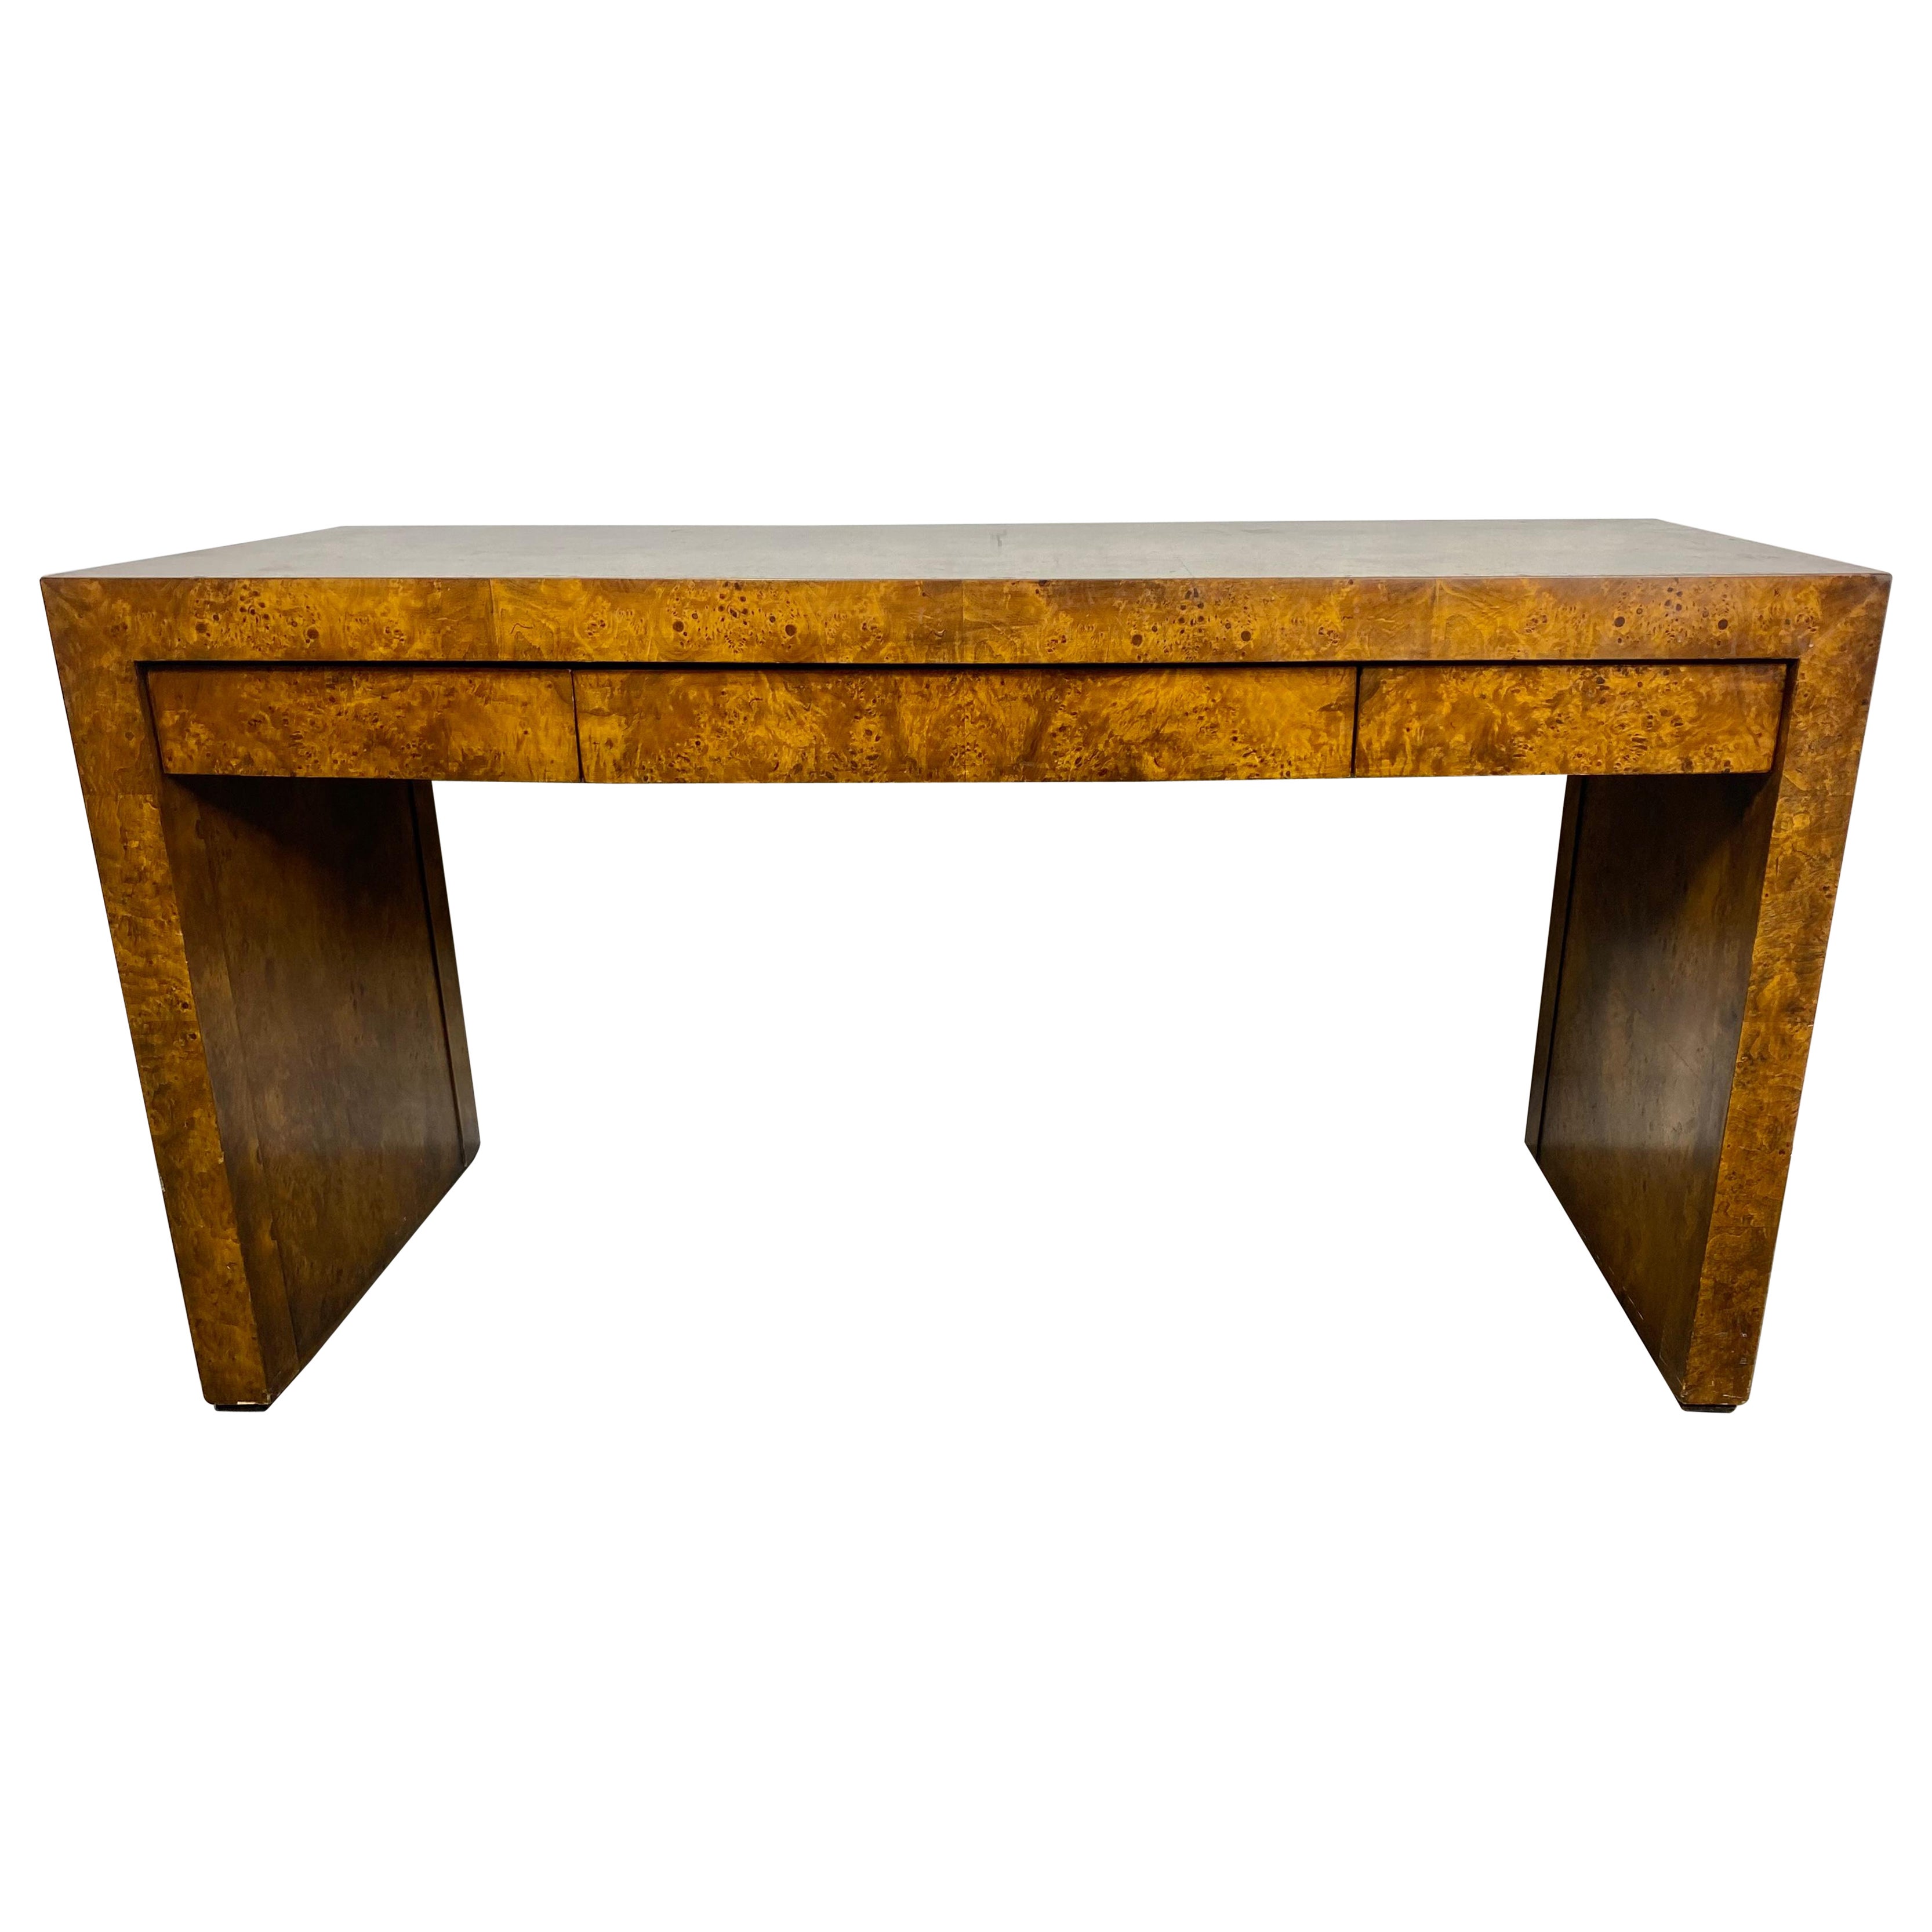 Classic Modernist 3-Drawer Burl Wood Desk designed by Milo Baughman